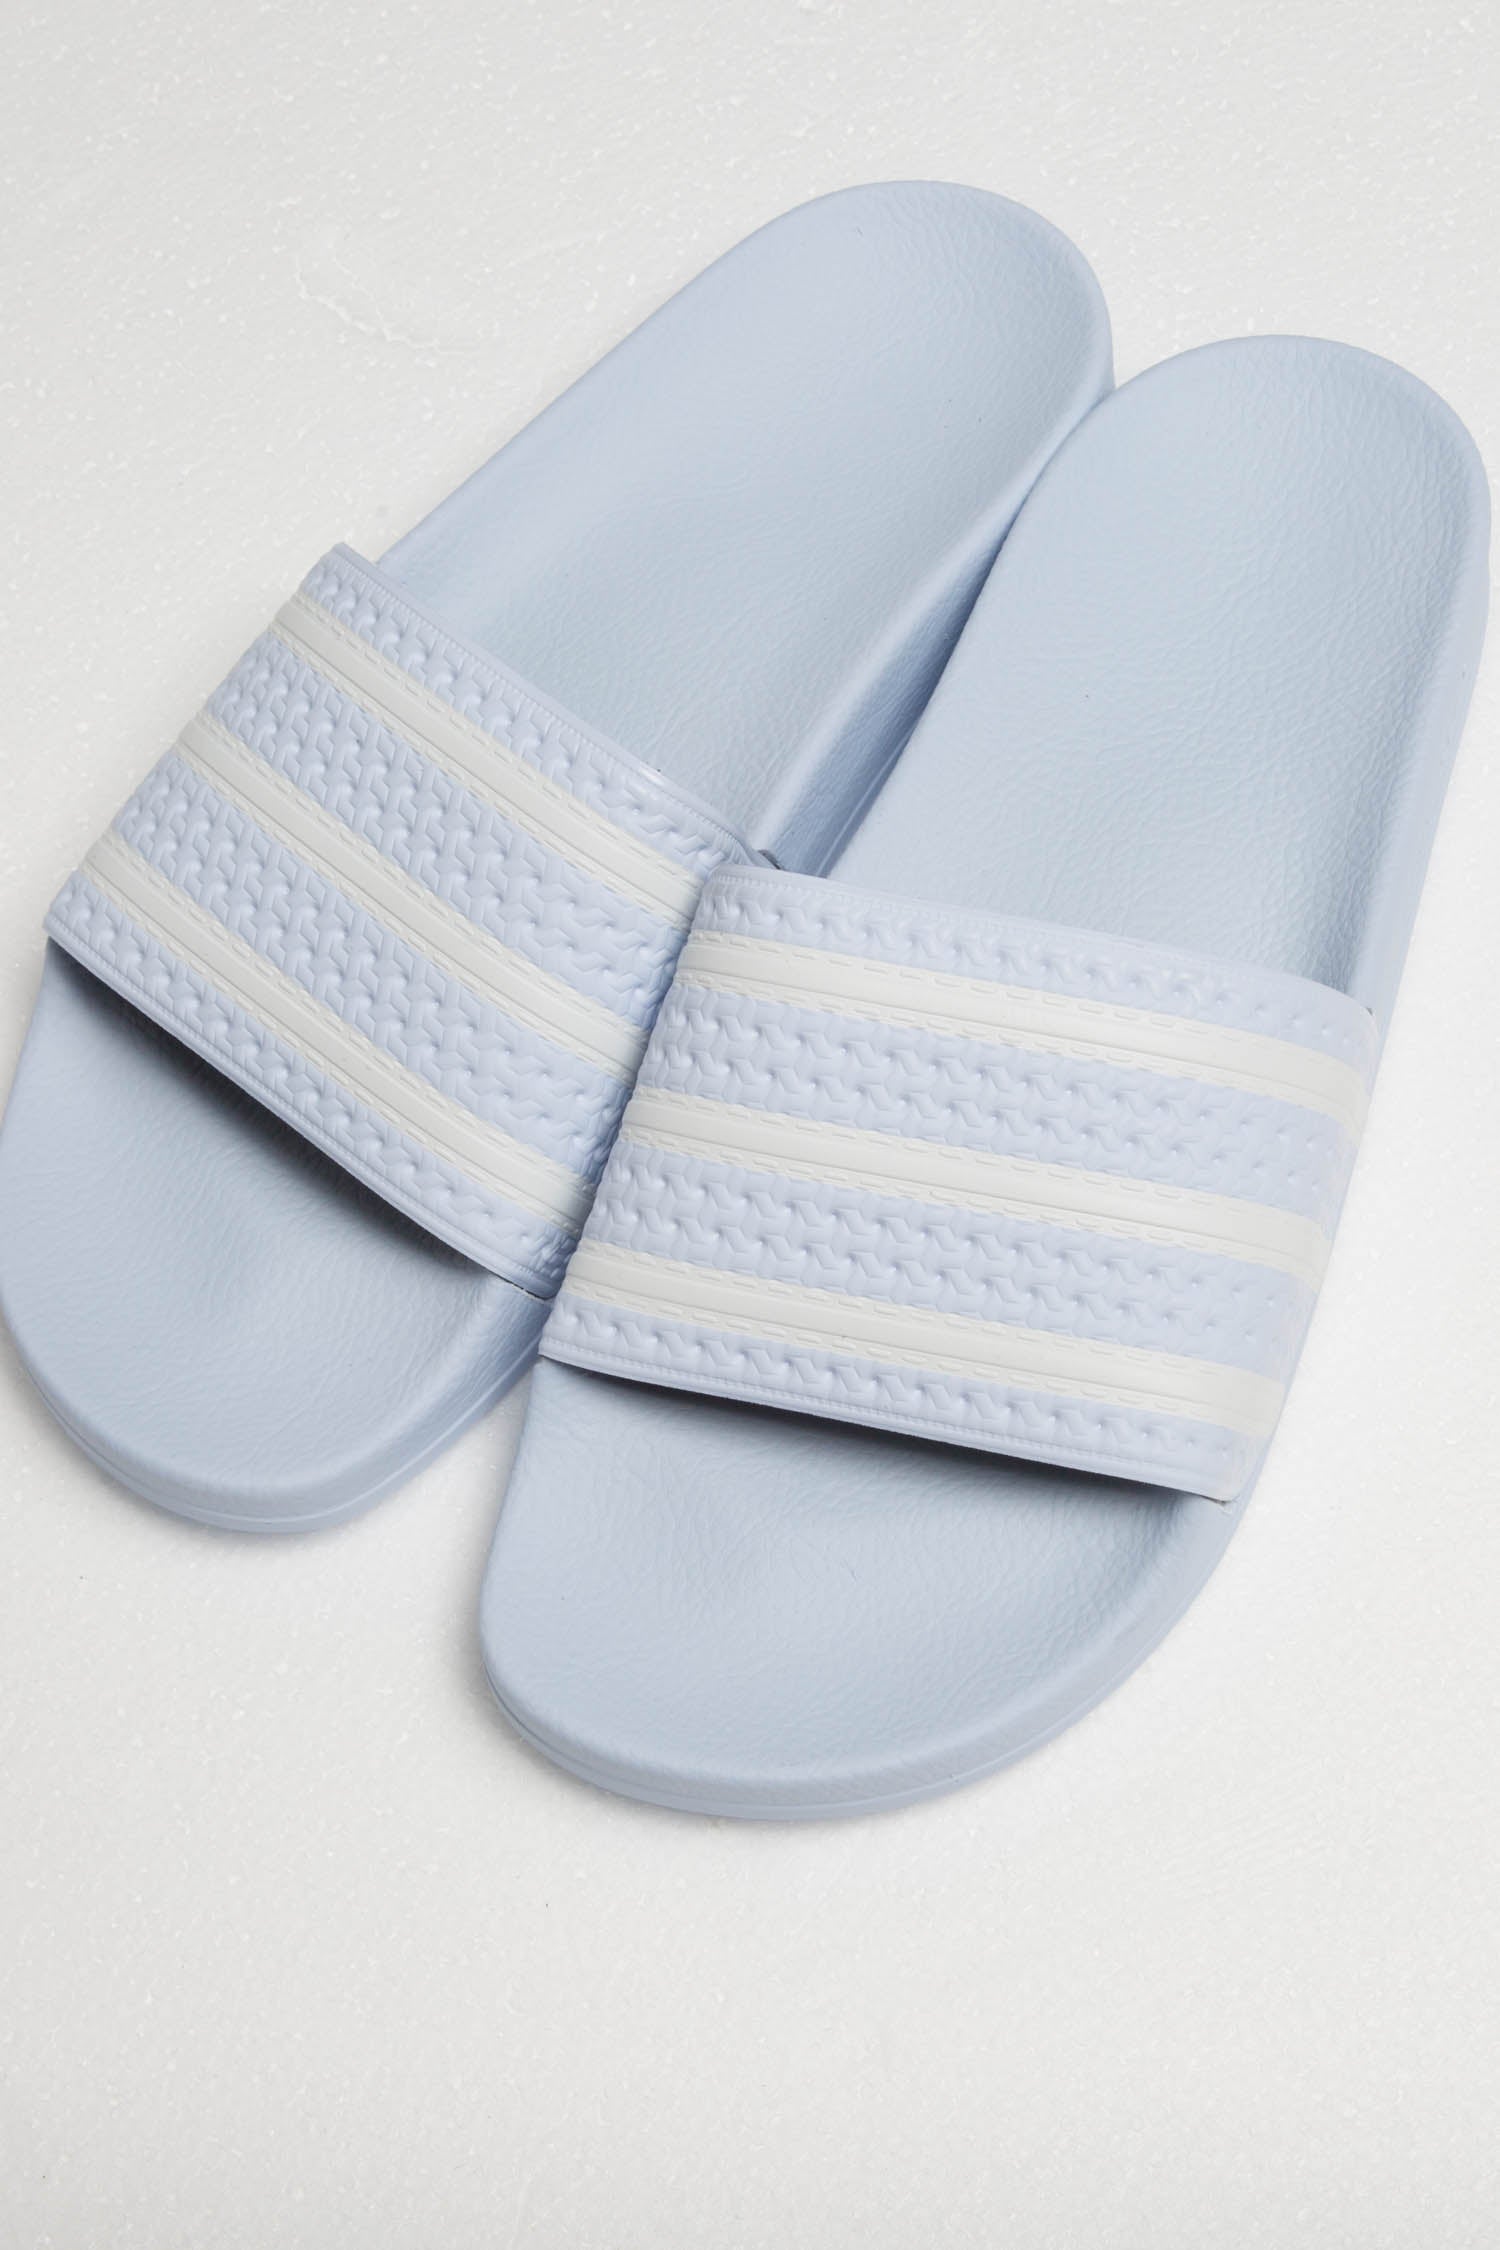 blue and white adidas slides